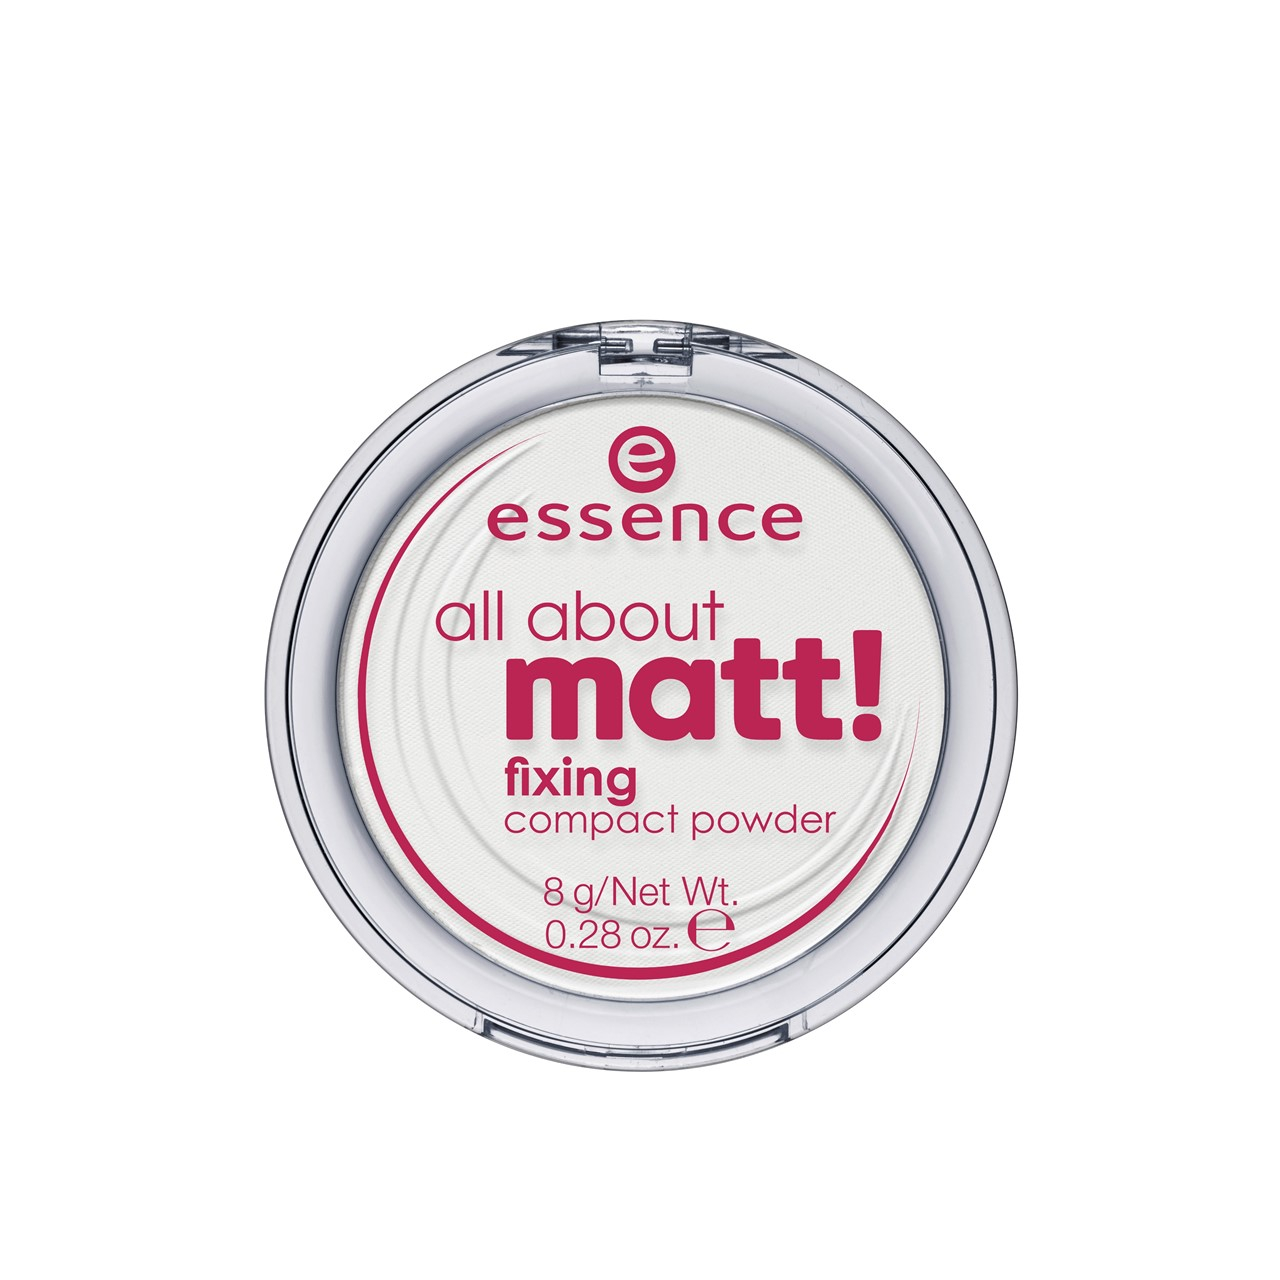 Buy USA (0.28oz) About essence Compact 8g Fixing All Powder · Matt!